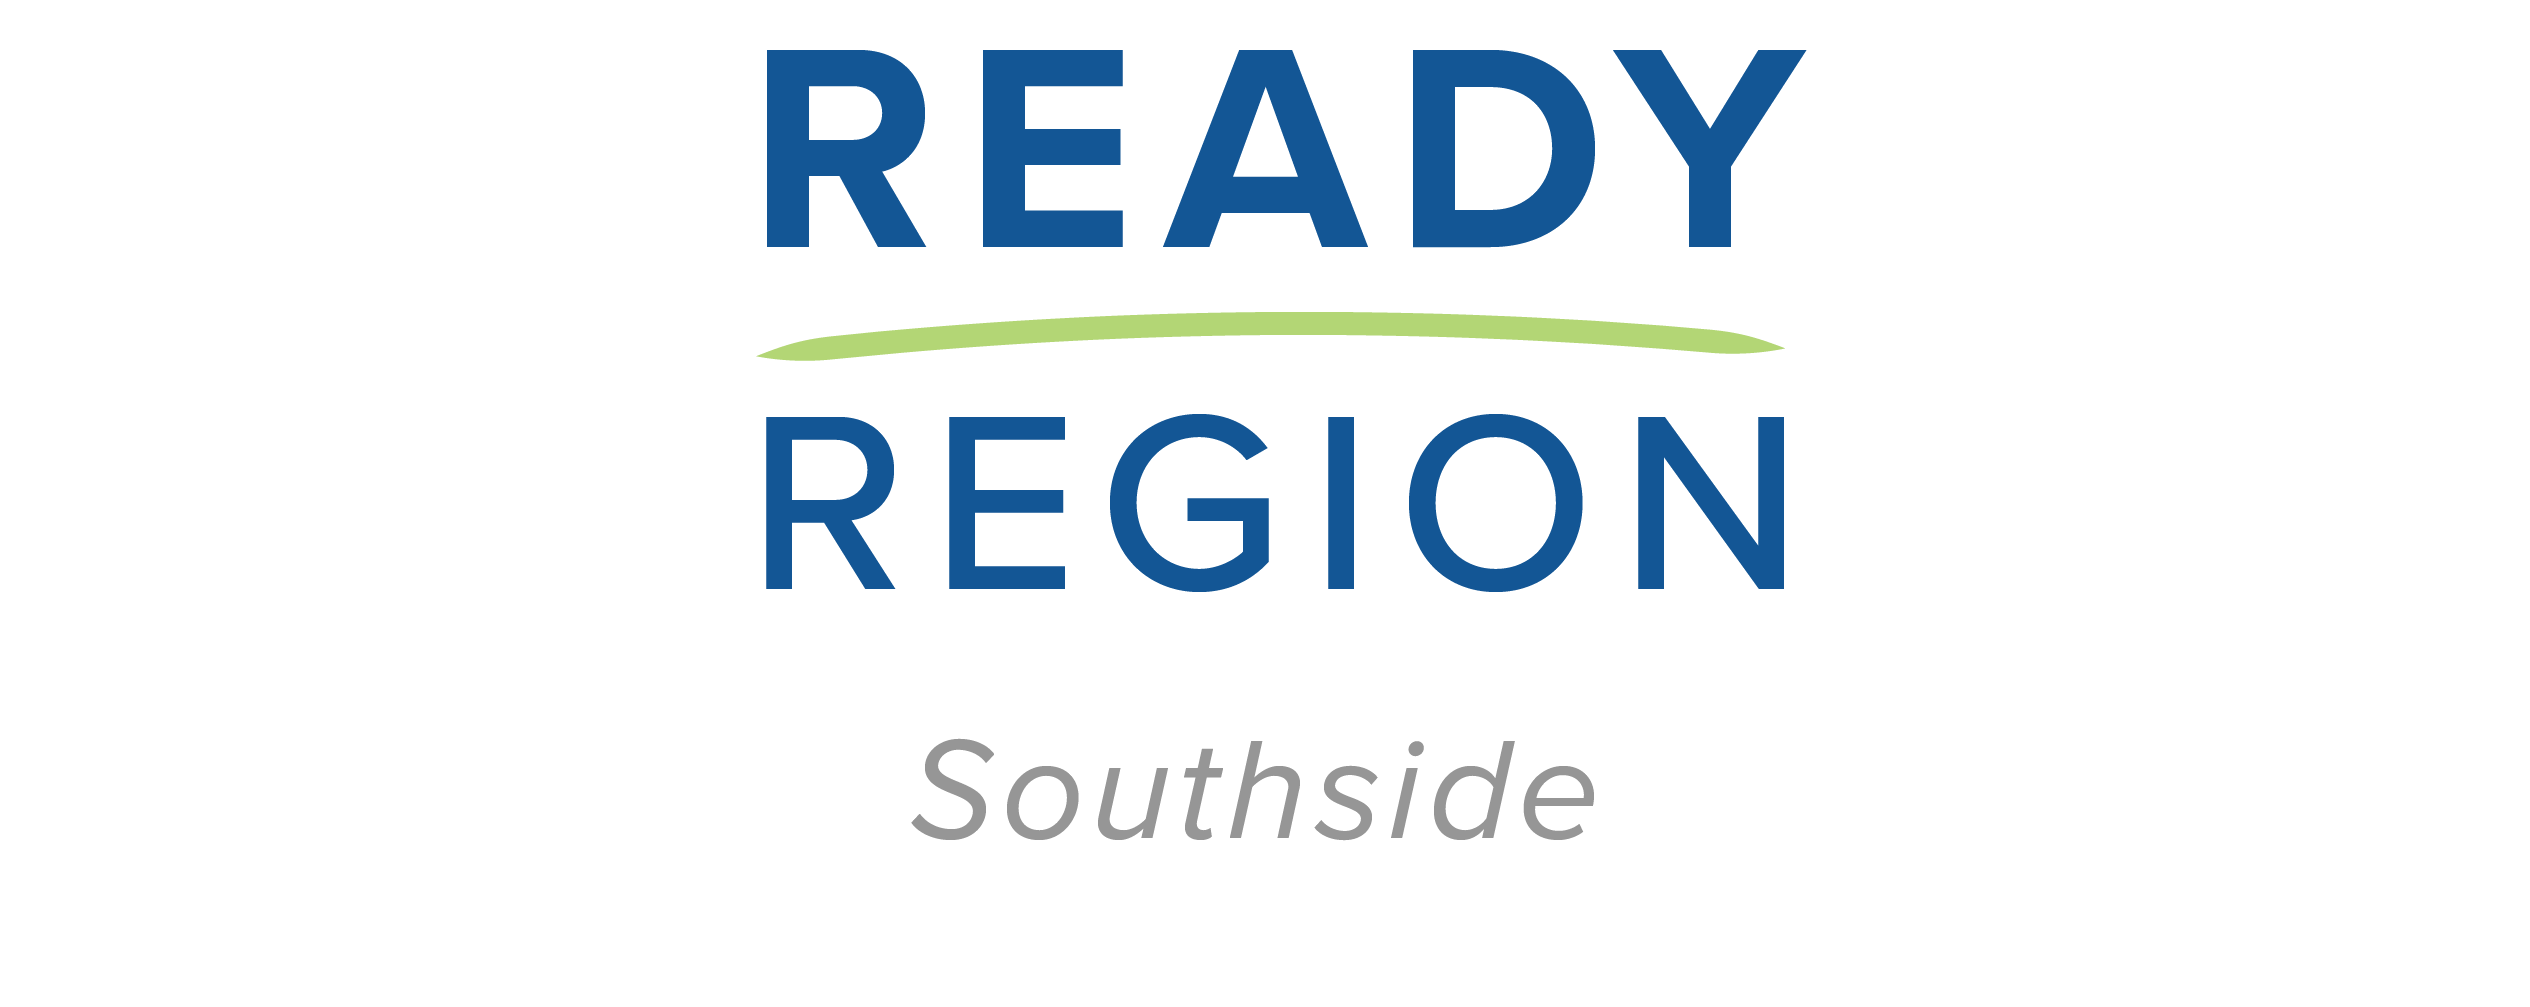 ready region southside logo